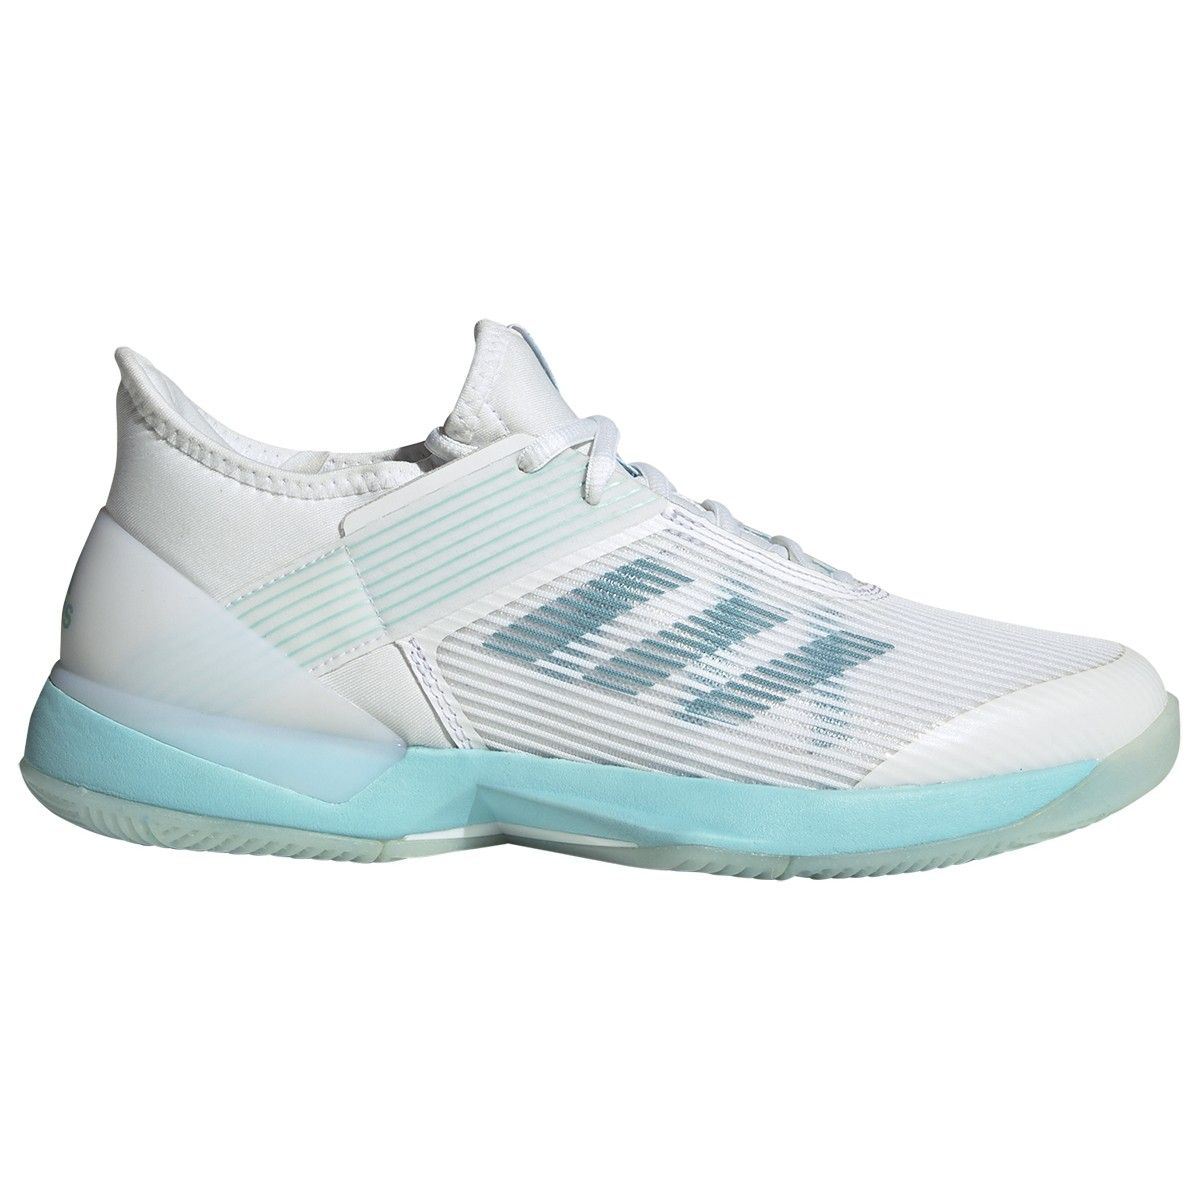 adidas Adizero Ubersonic 3 X Parley Women's Tennis Shoes CG6